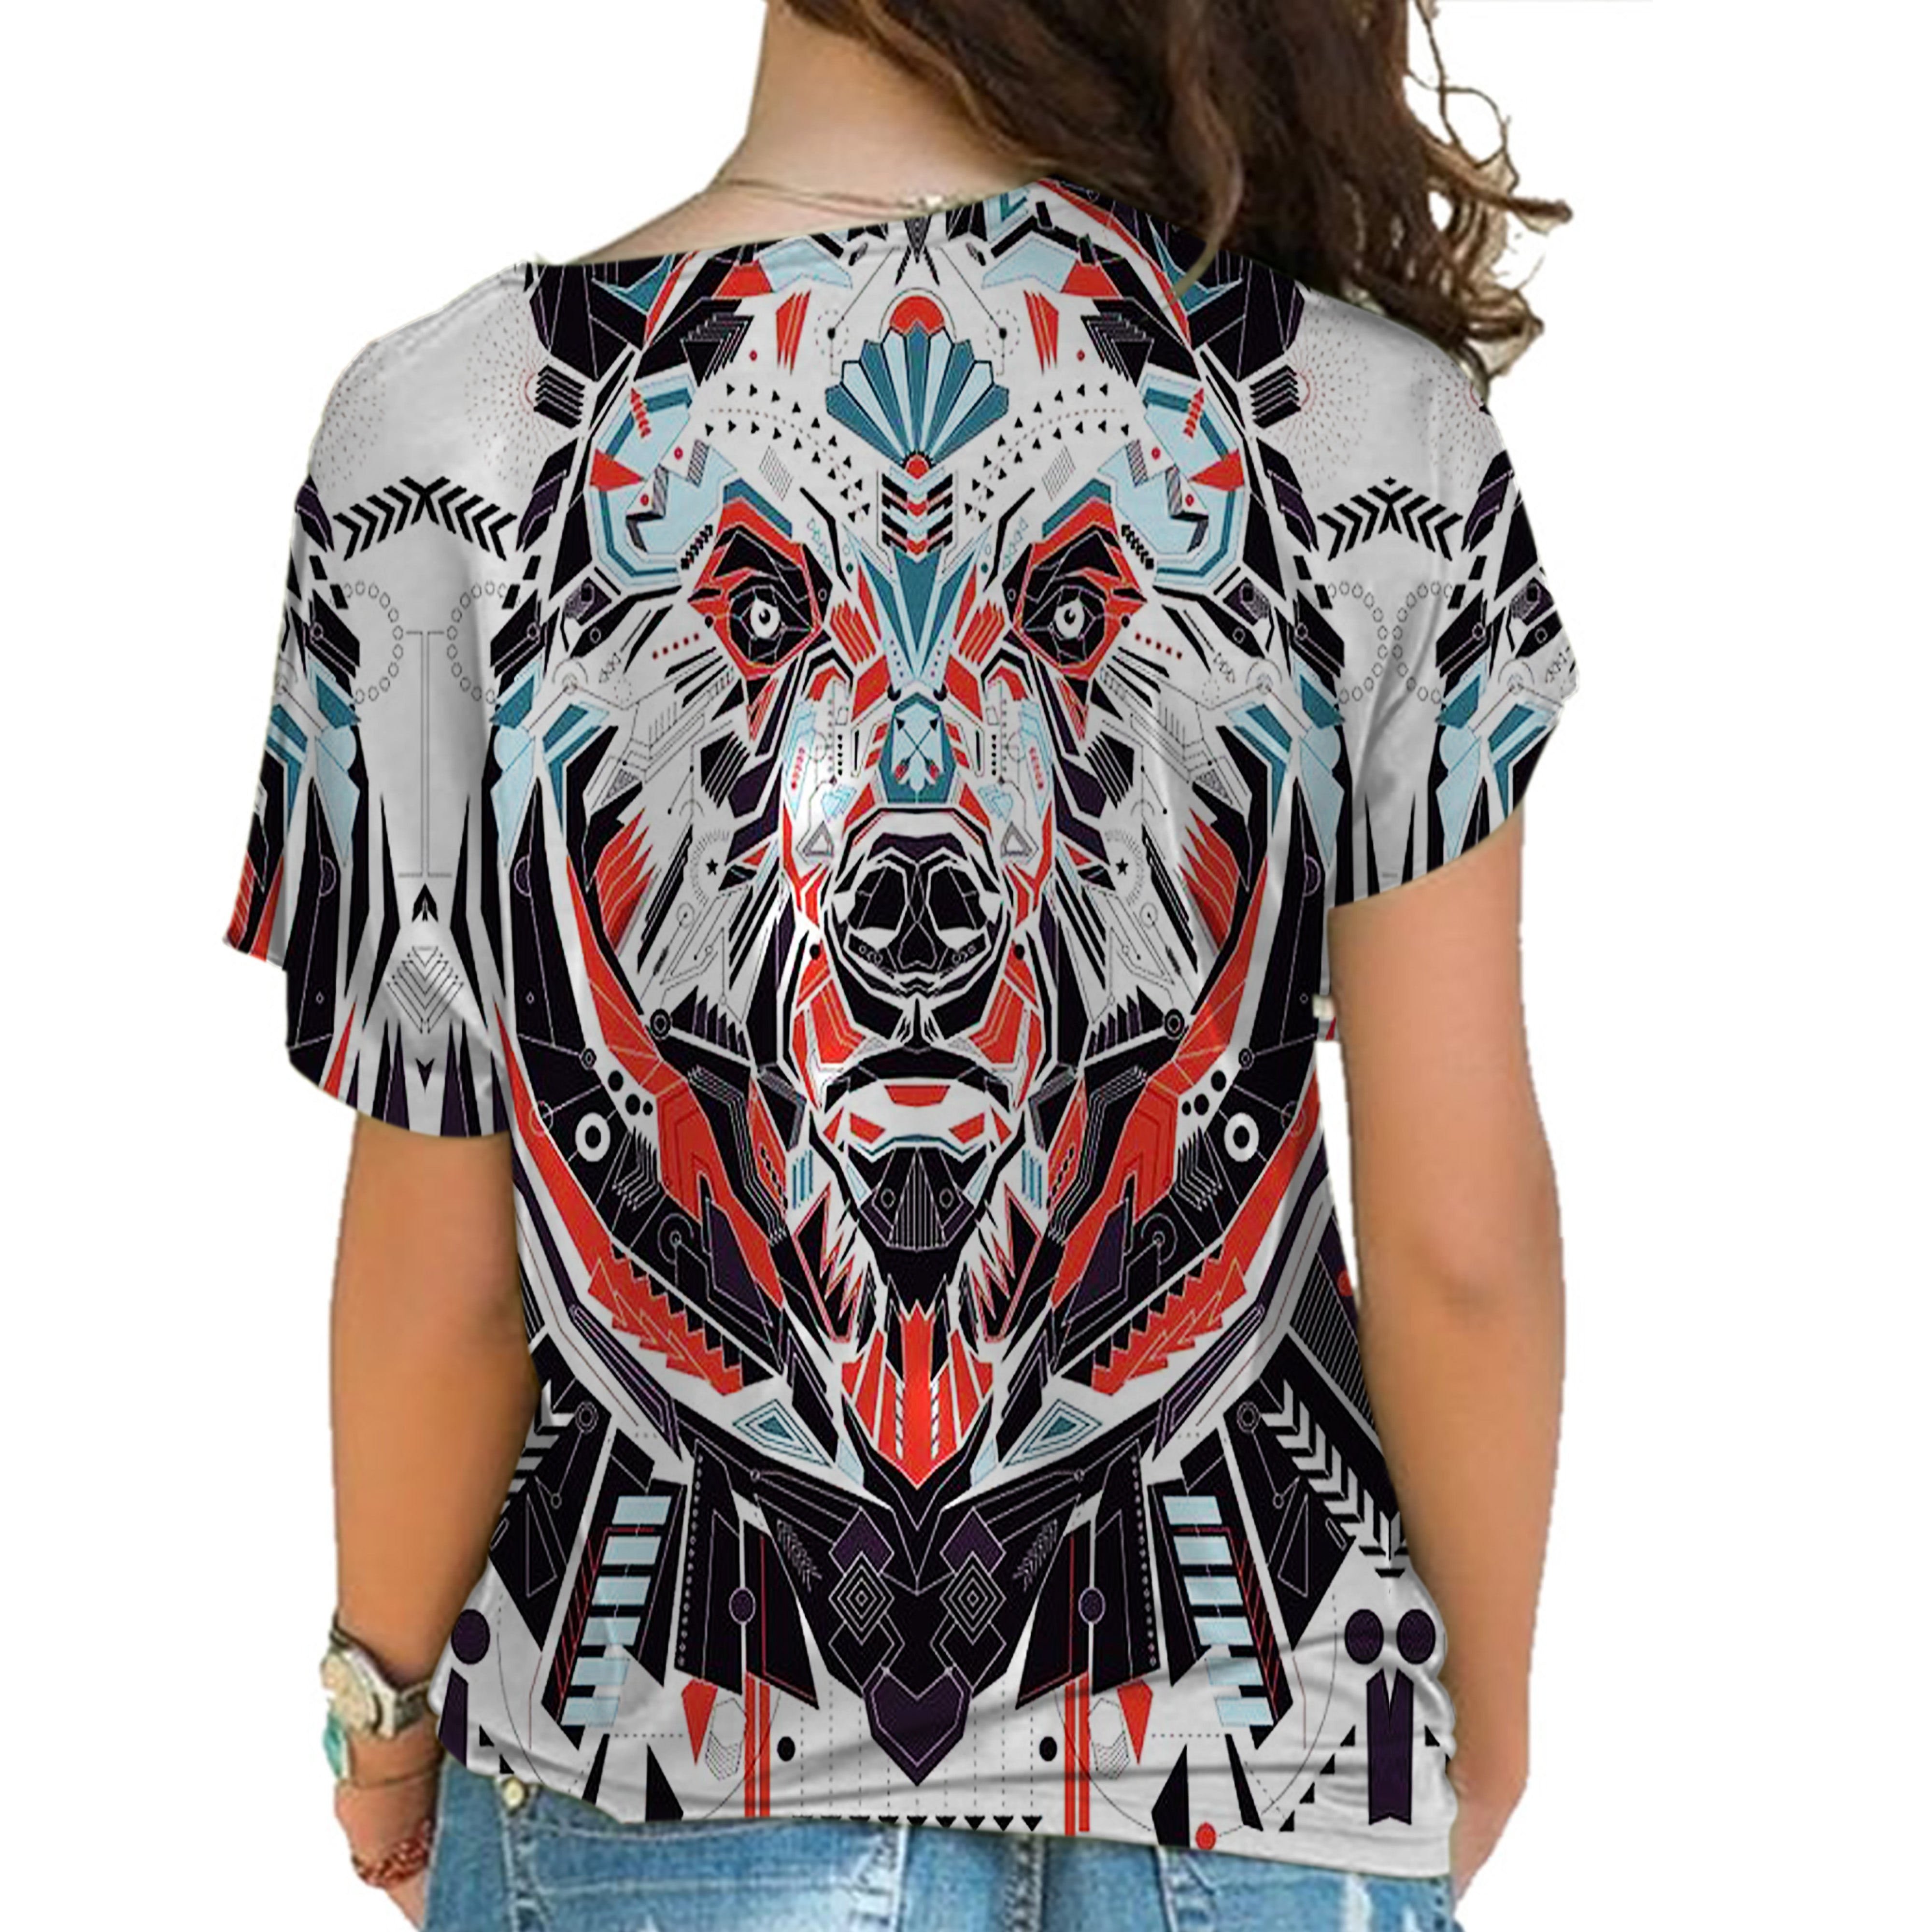 Powwow Store native american cross shoulder shirt 1132